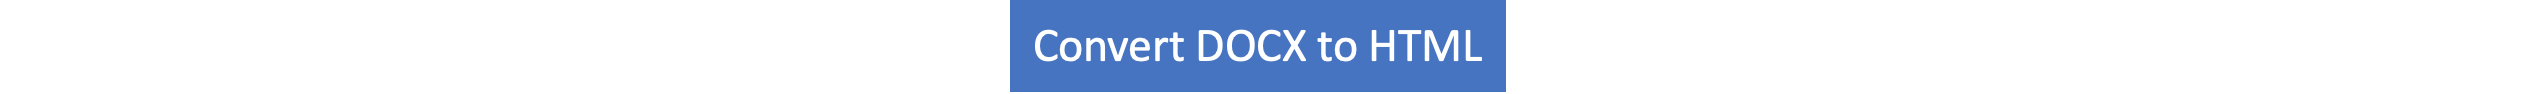 DOCX zu HTML